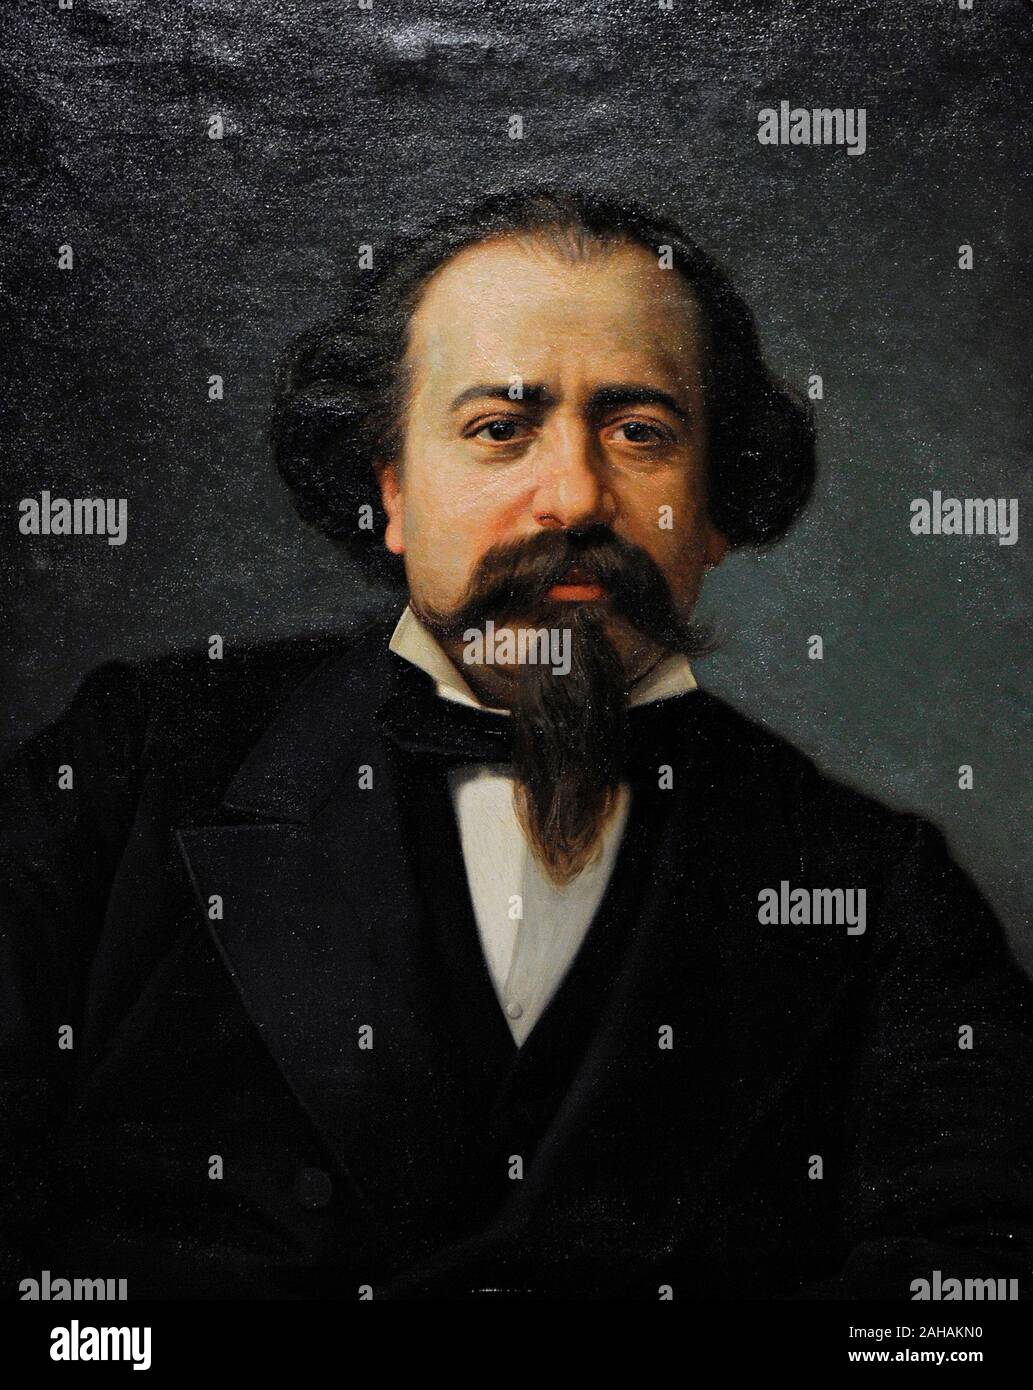 Adelardo Lopez de Ayala (1828-1879). Spanish politician and dramatist. Portrait by Ignacio Suarez Llanos (1830-1881), 1880. Museum of Romanticism. Madrid. Spain. Stock Photo